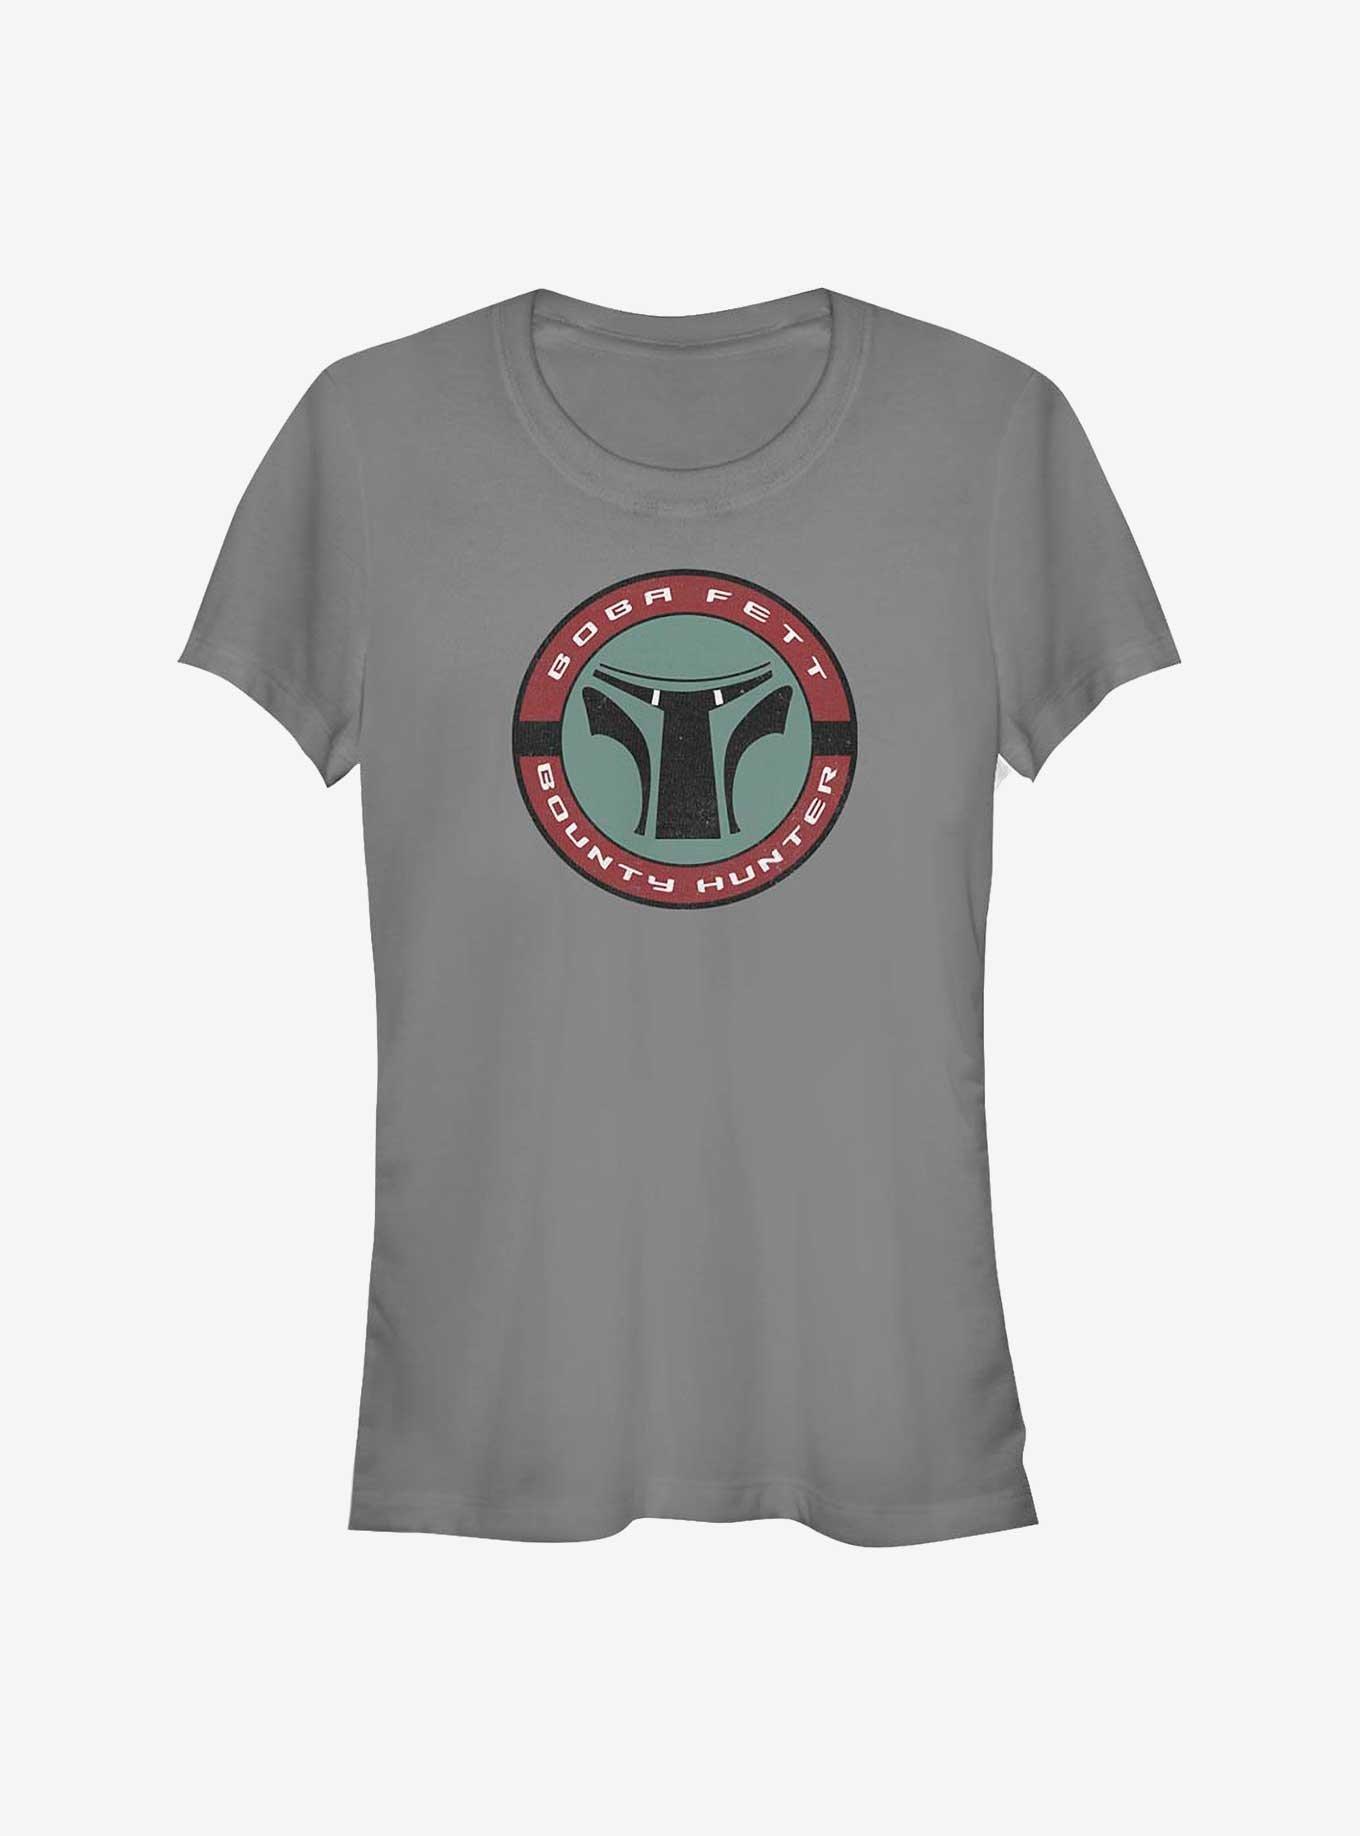 Star Wars Boba Fett Hunter Badge Girl's T-Shirt, CHARCOAL, hi-res